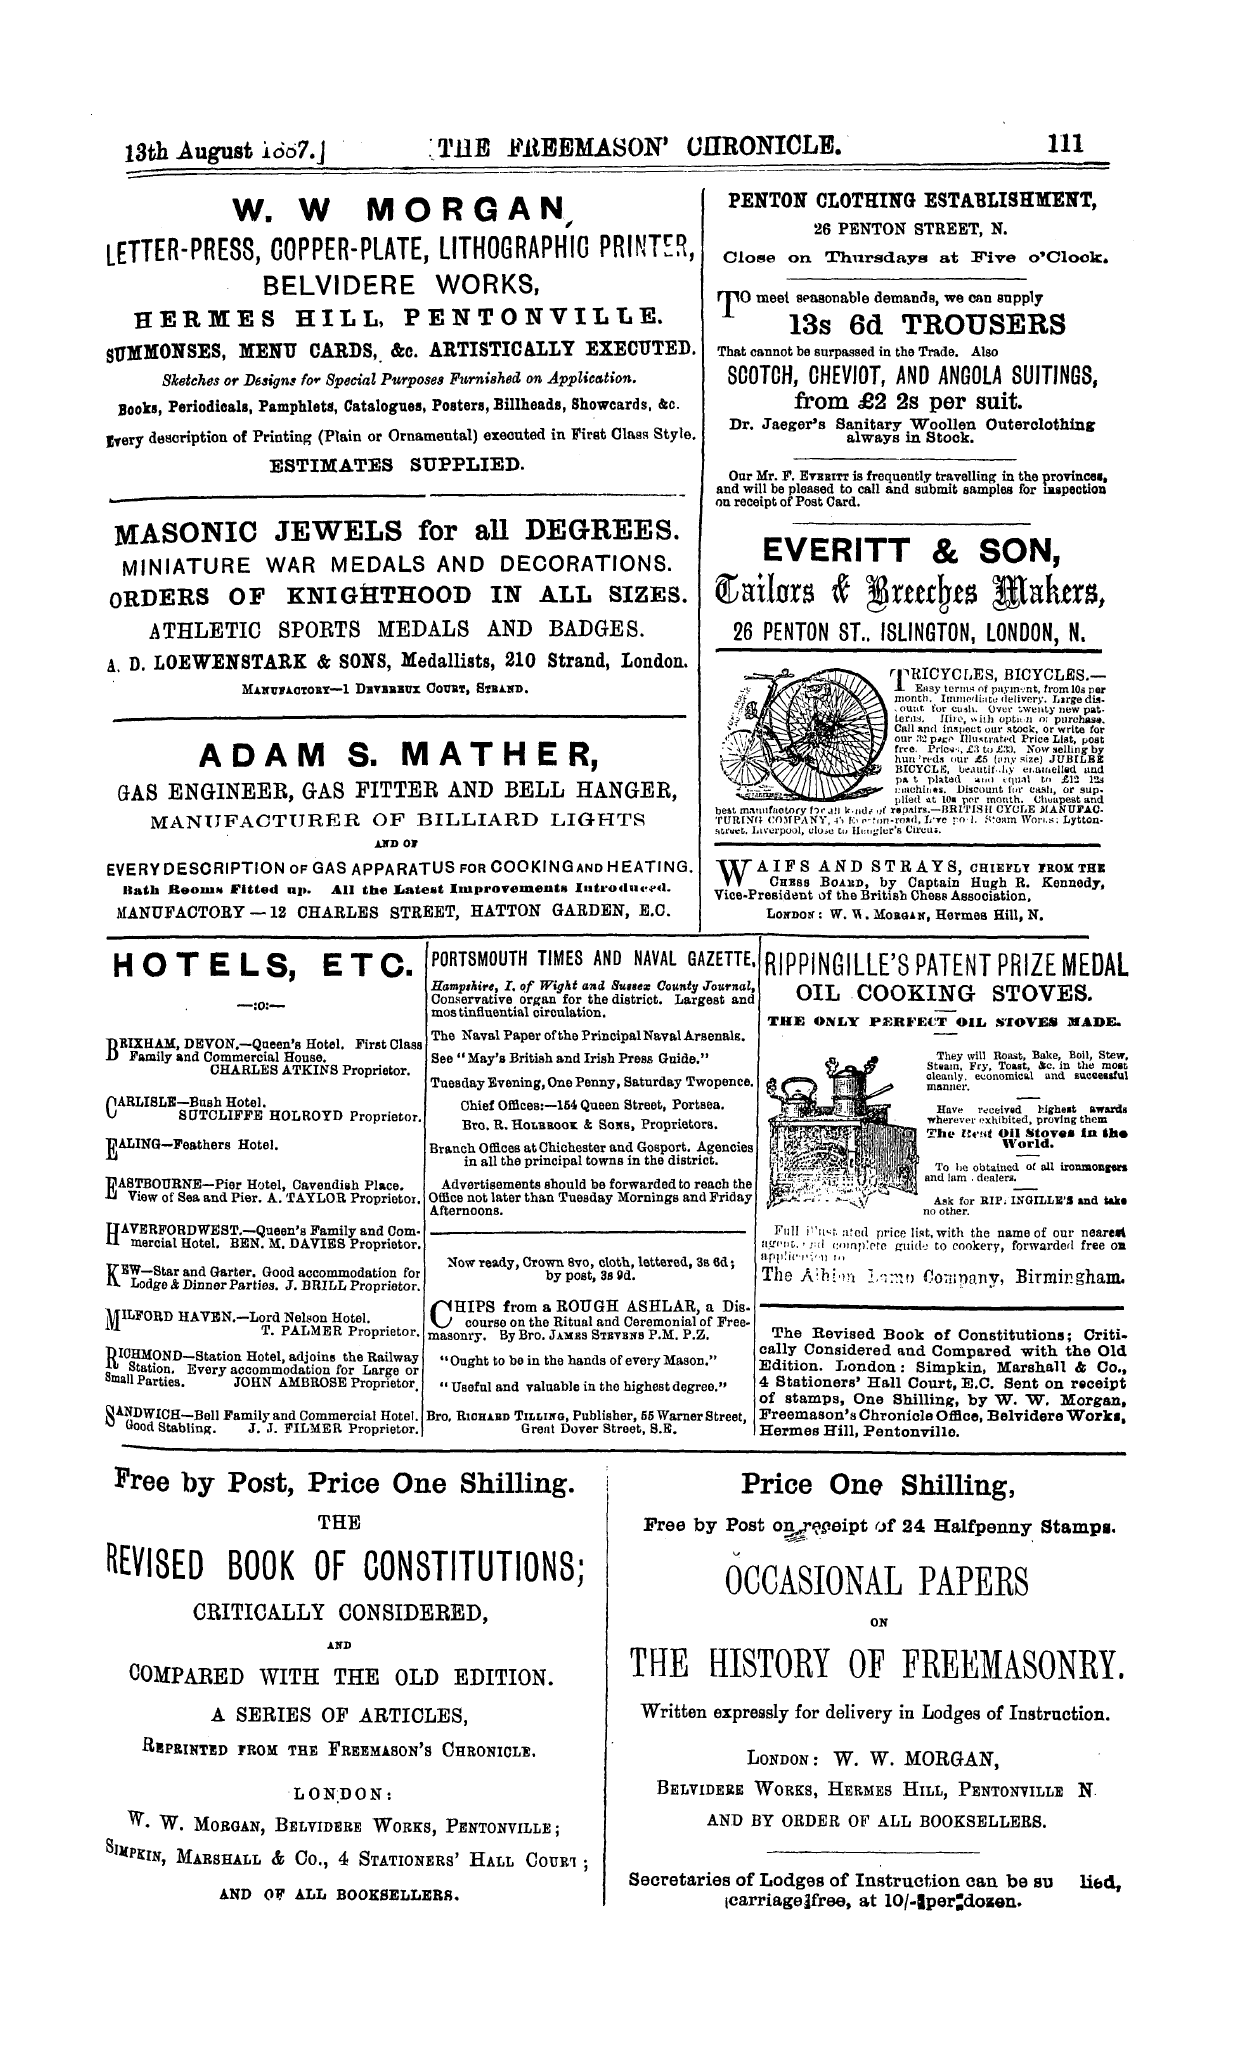 The Freemason's Chronicle: 1887-08-13 - Ad01504